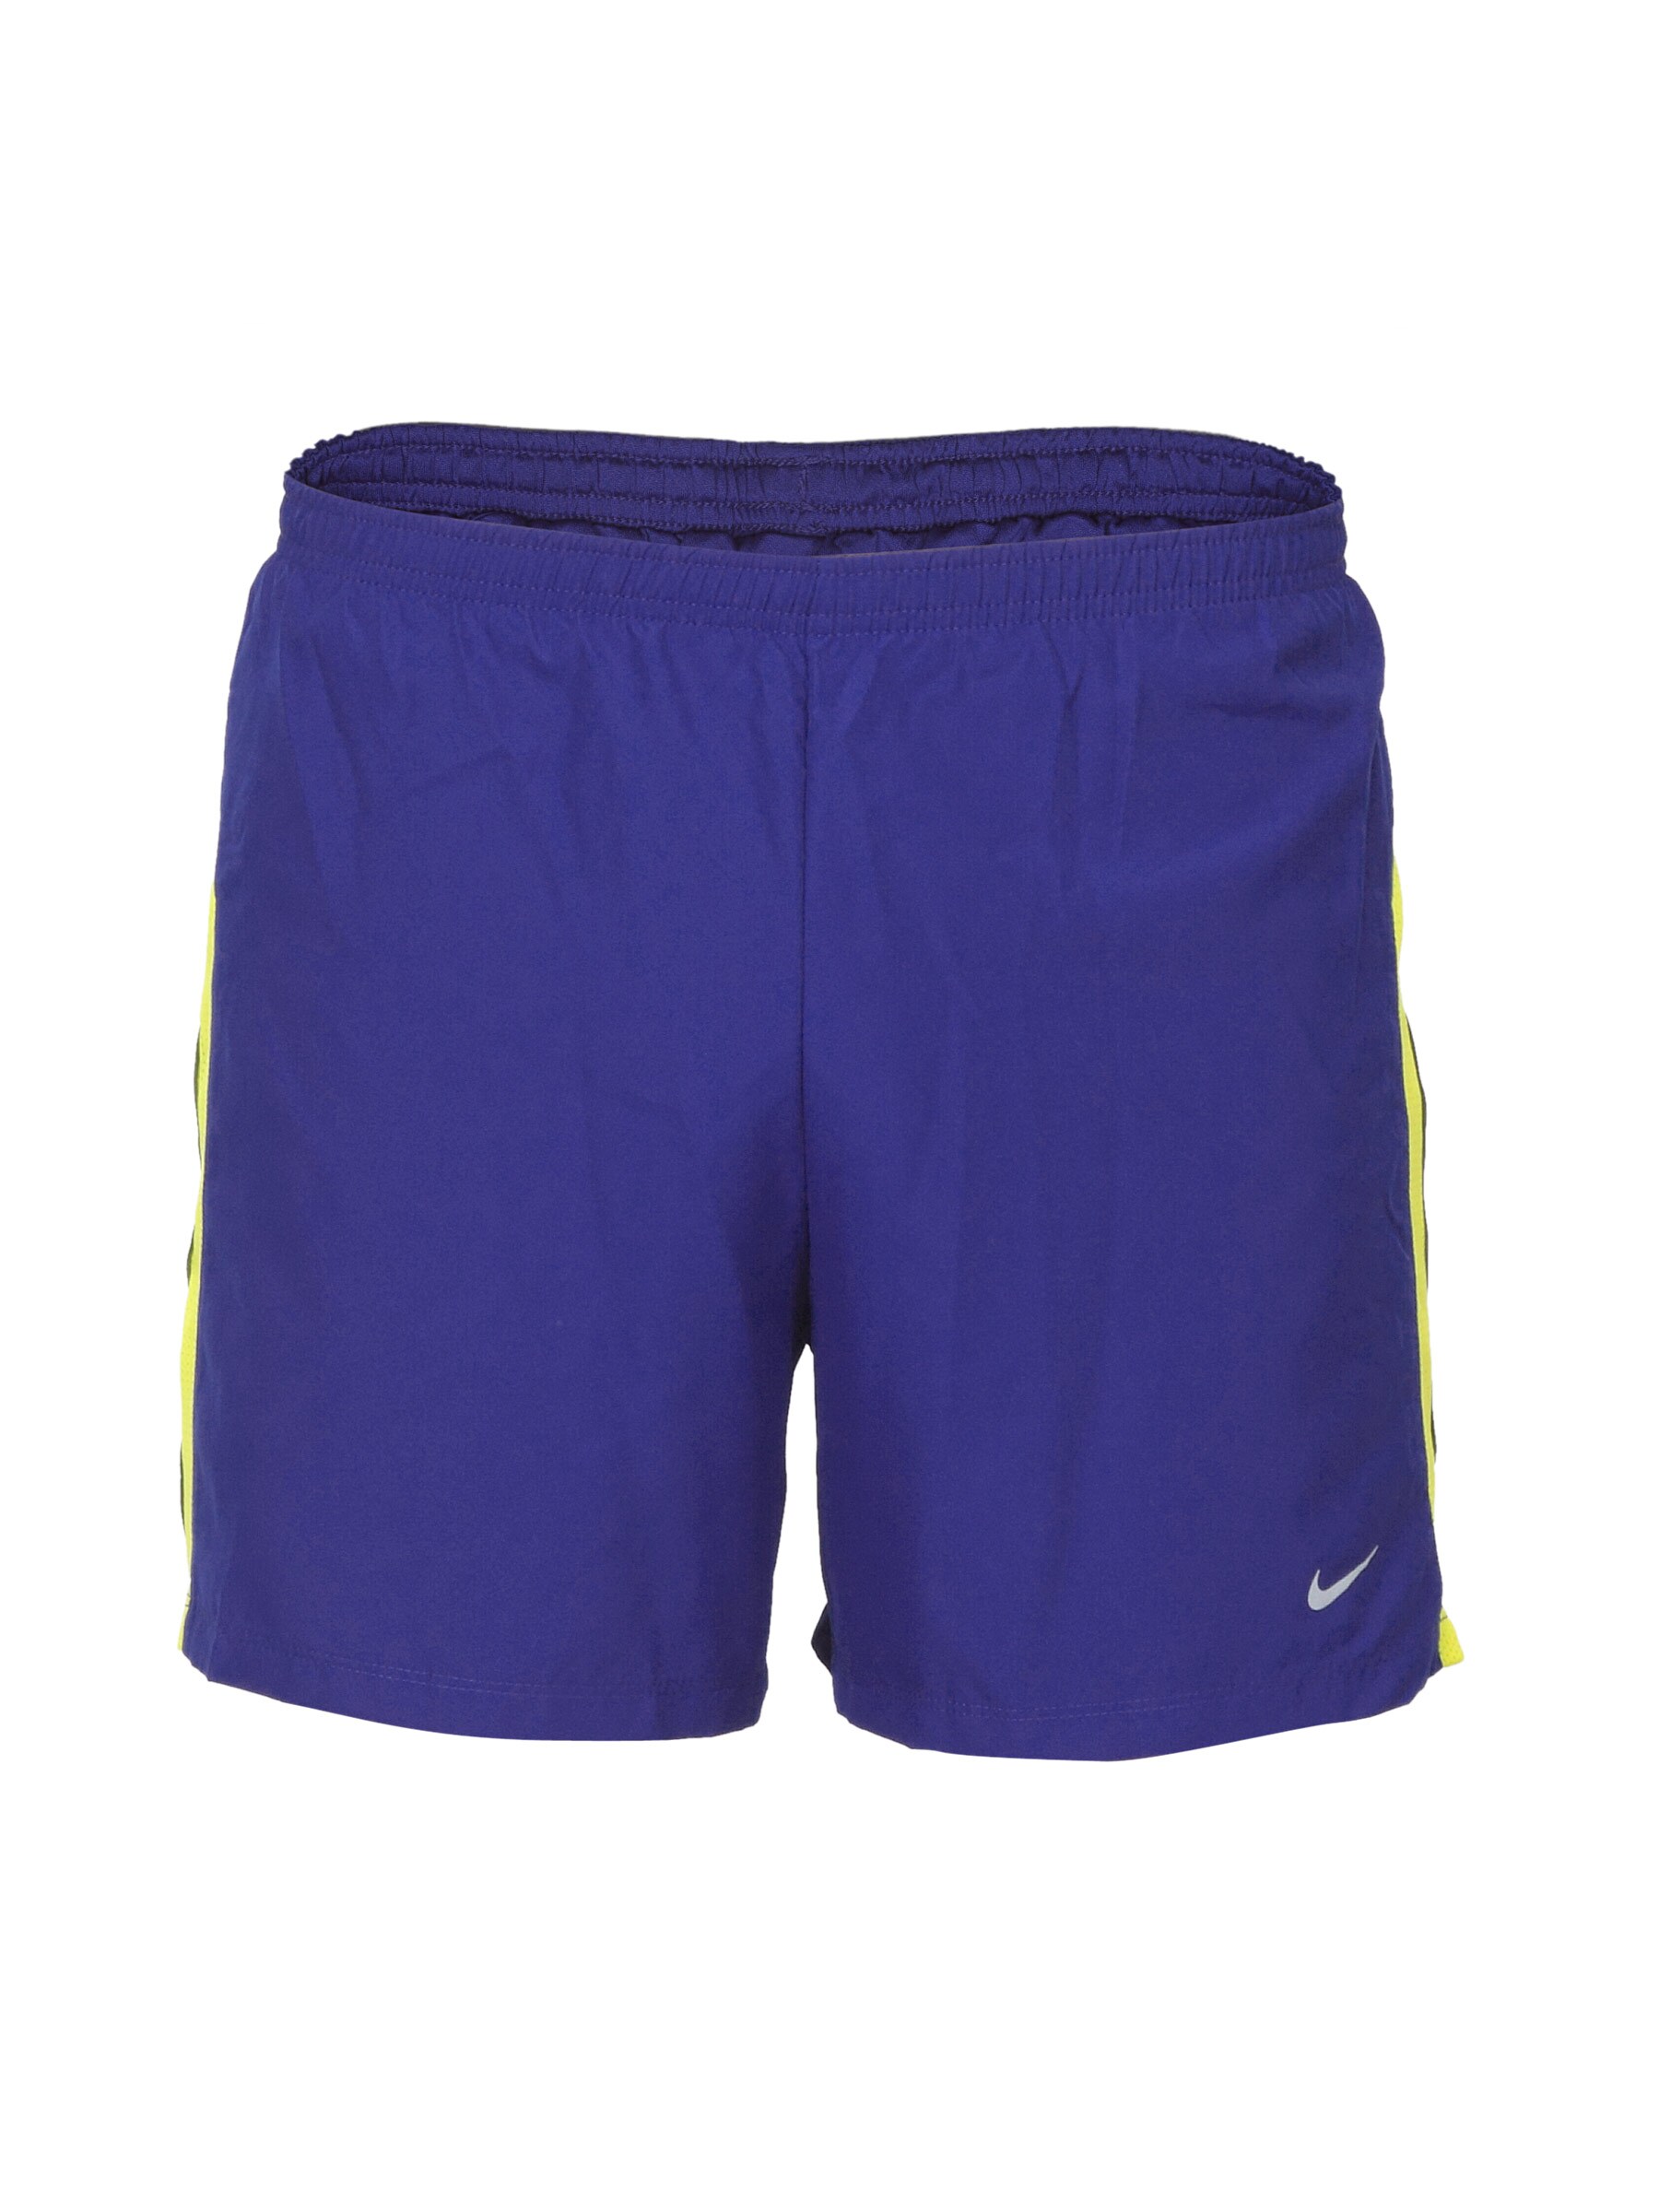 Nike Men Woven Reflective Blue Shorts